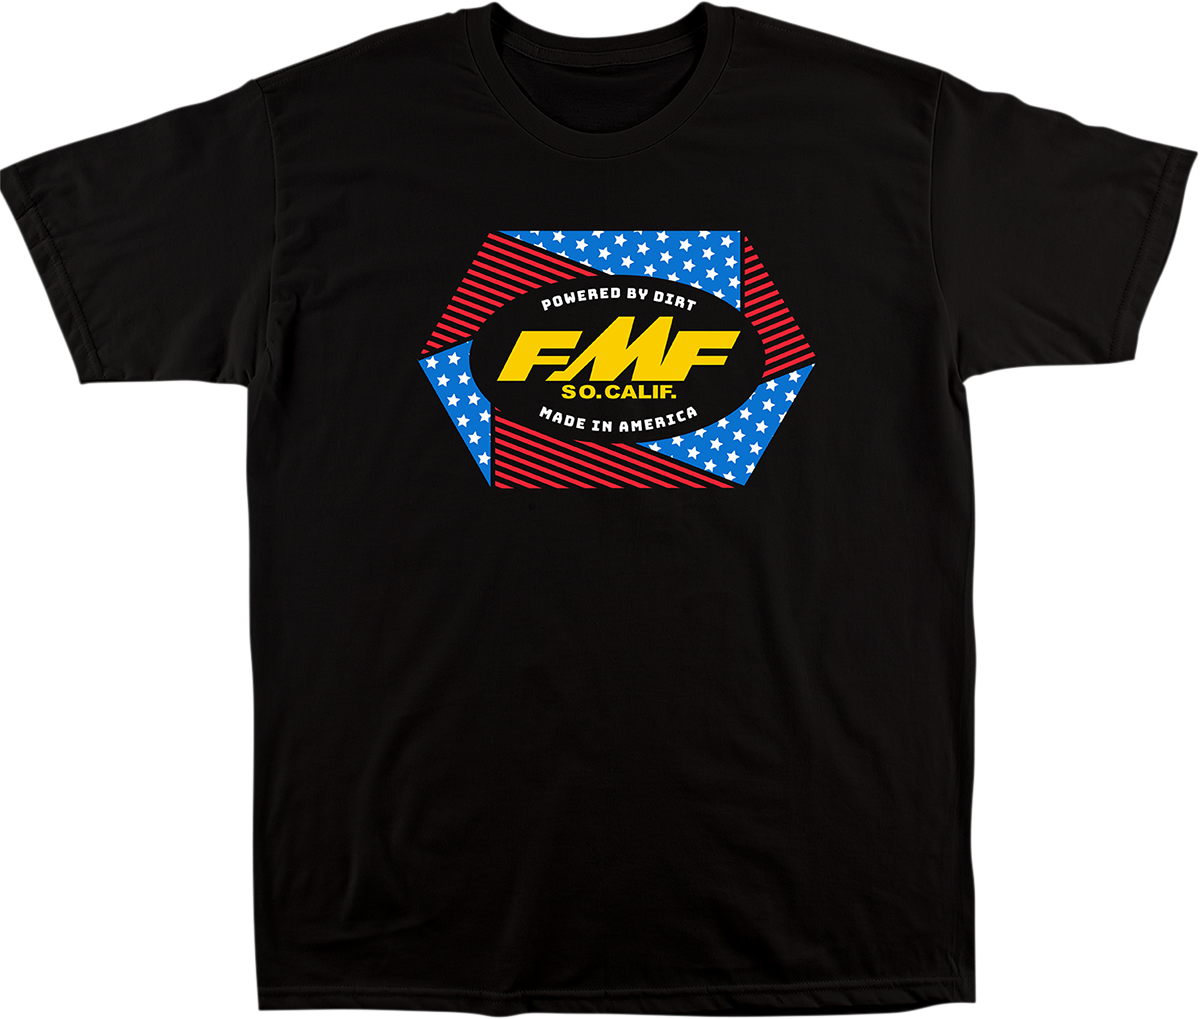 FMF Geometry T-Shirt - Black - Large SU21118901BKLG 3030-20693